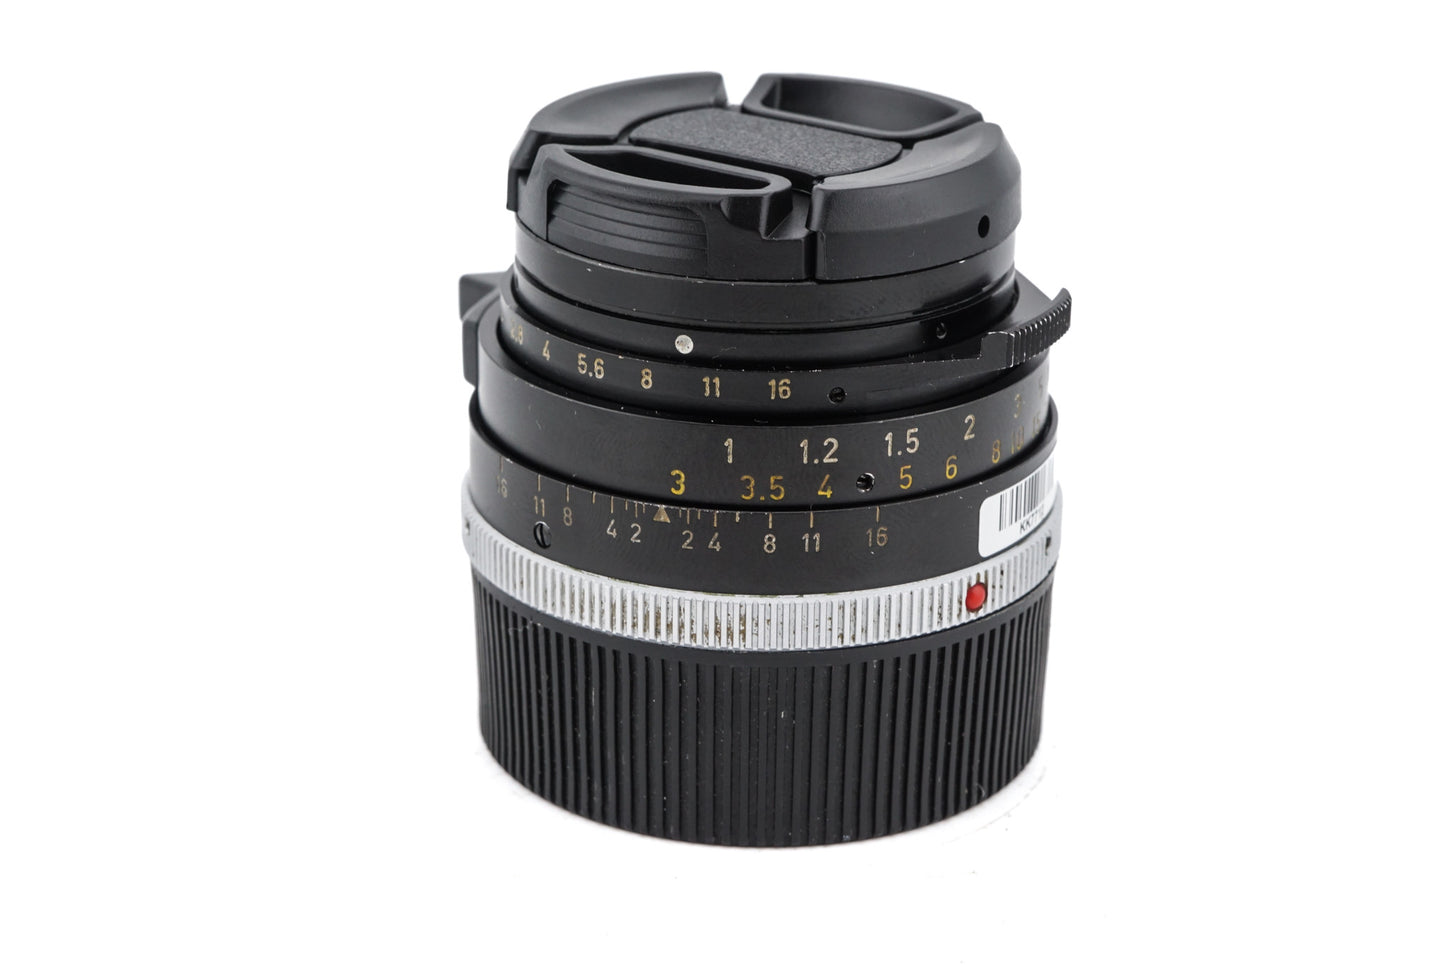 Leica 35mm f1.4 Summilux II (11870)